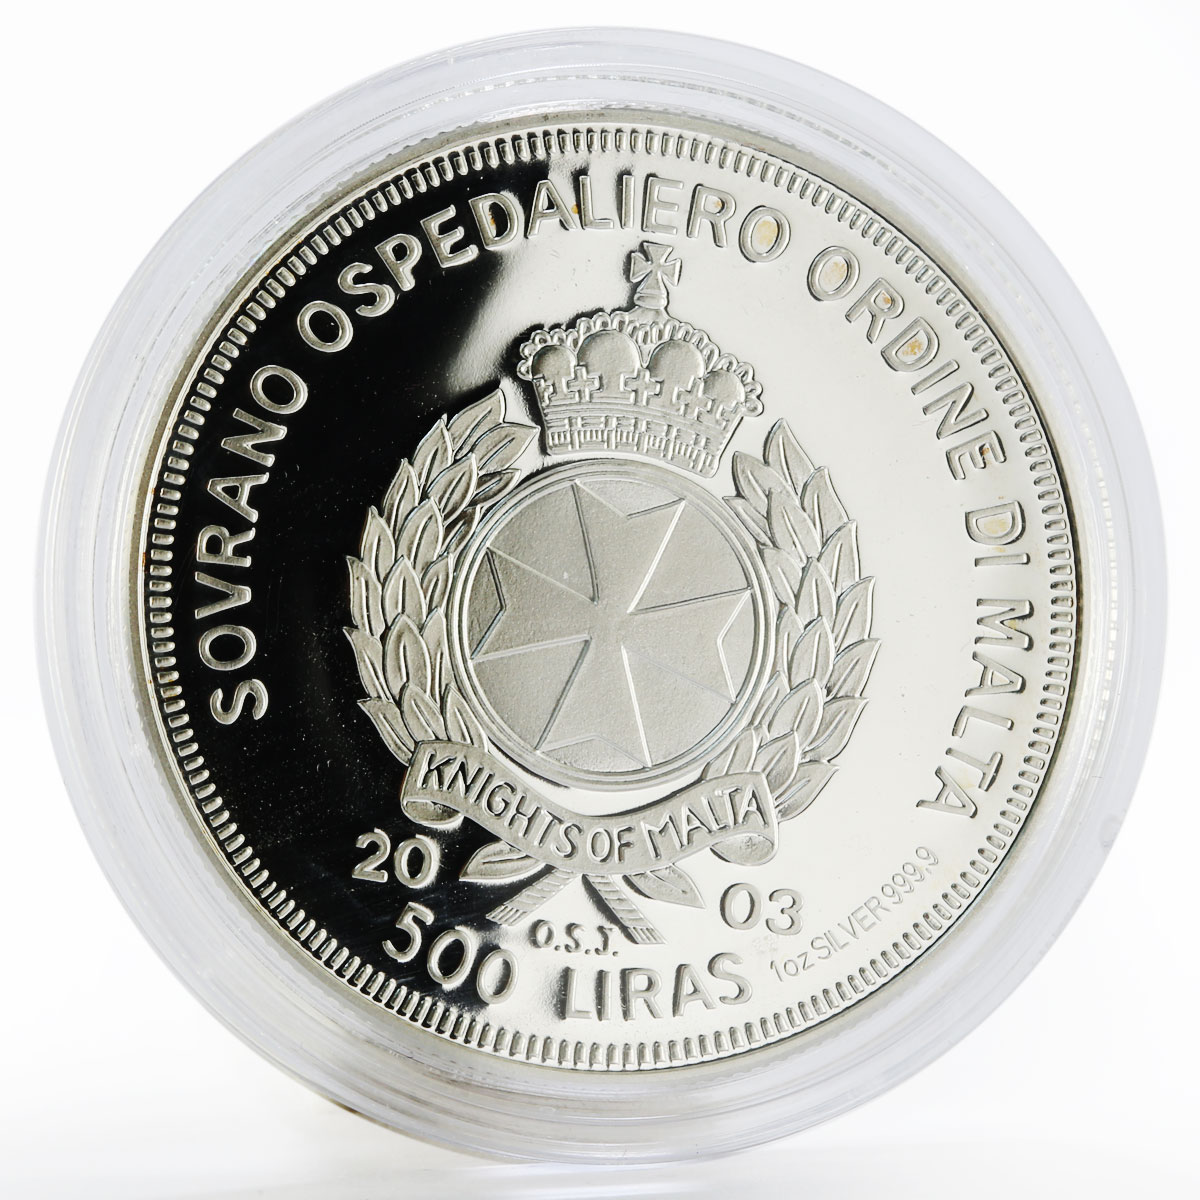 Malta 500 liras Champions for Peace series Mahatma Gandhi proof silver coin 2003